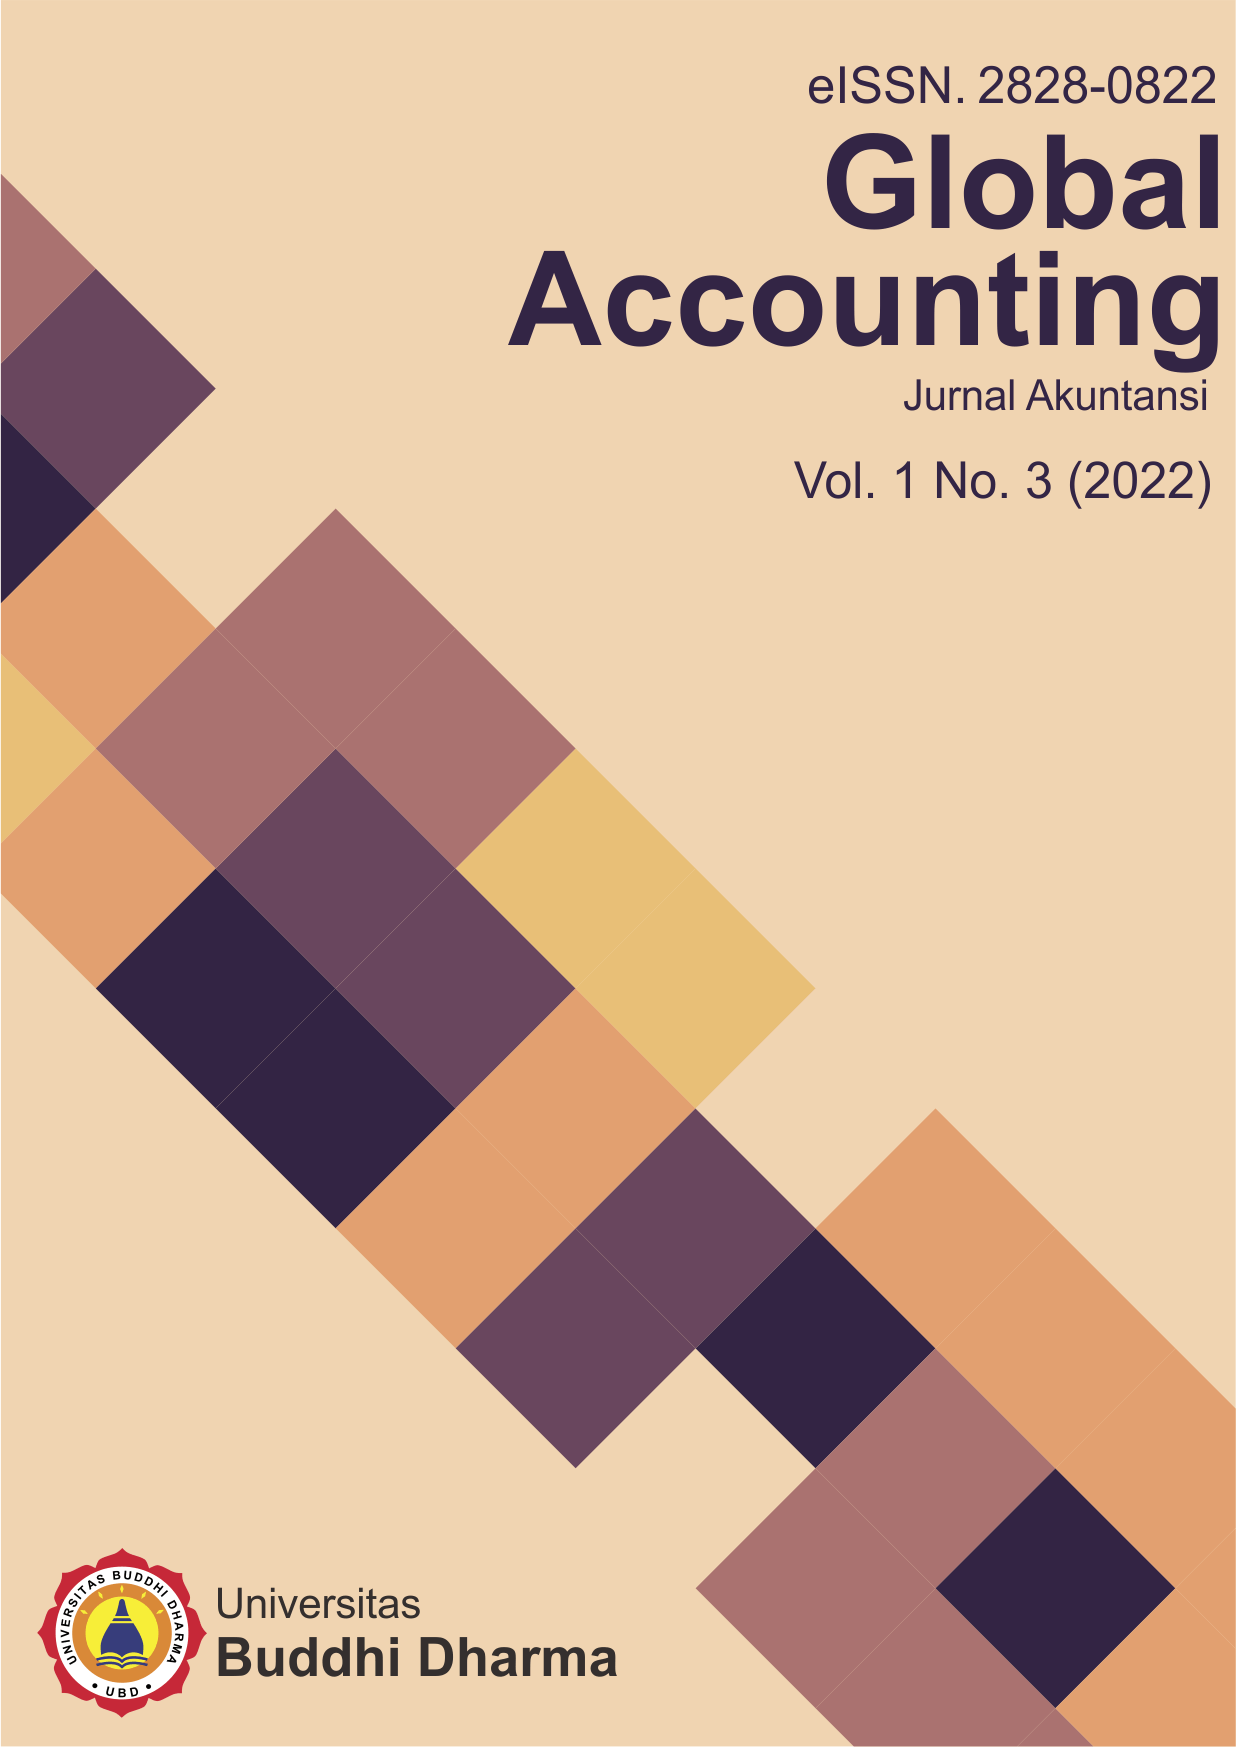 					View Vol. 1 No. 3 (2022): Global Accounting
				